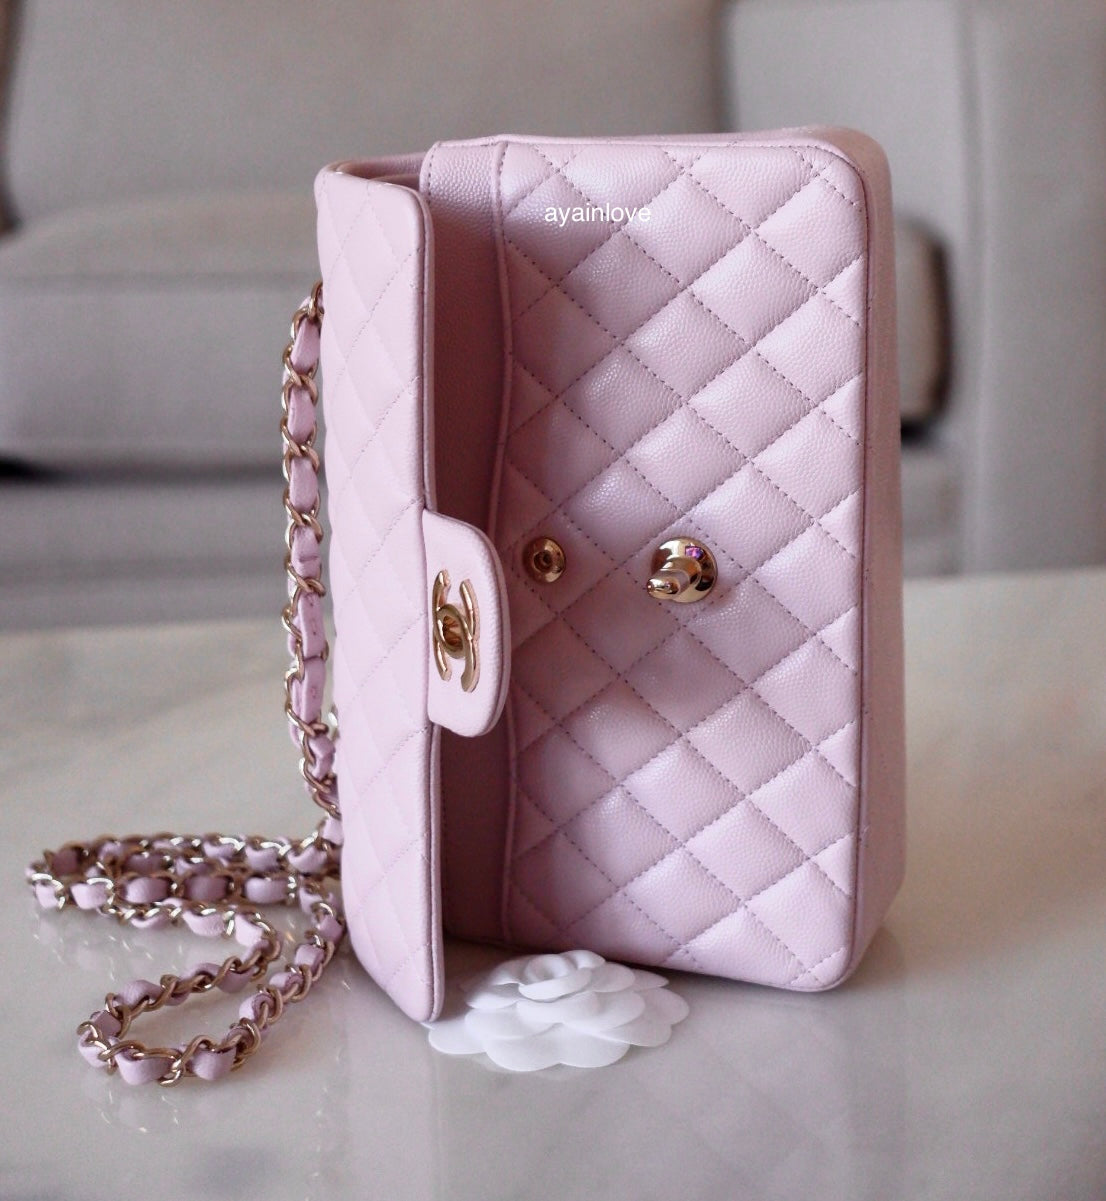 Mini Chanel Flap Bag - Shop on Pinterest